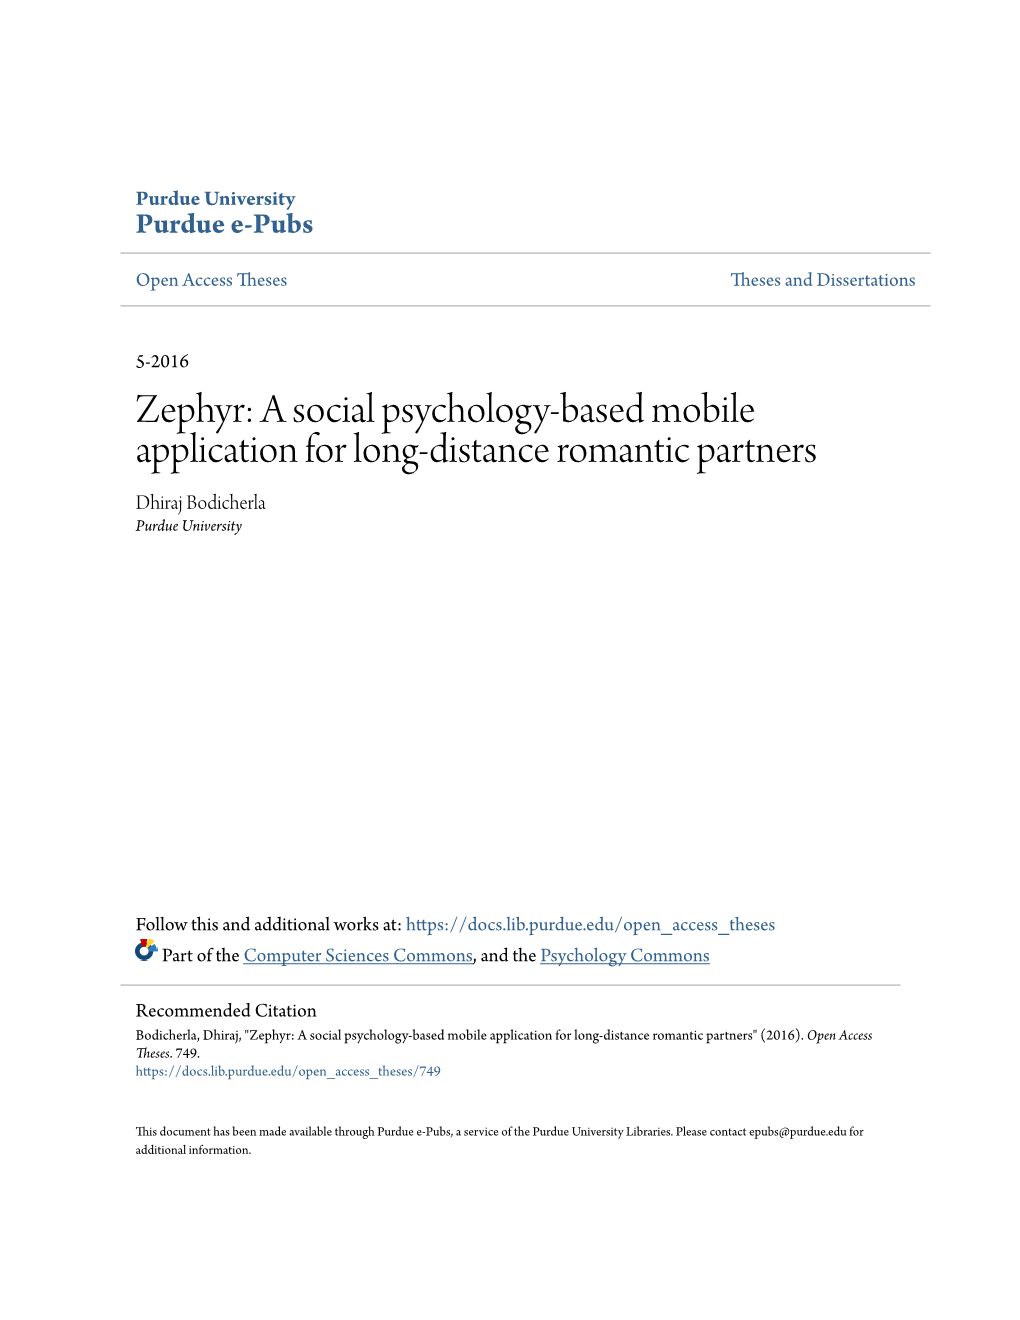 Zephyr: a Social Psychology-Based Mobile Application for Long-Distance Romantic Partners Dhiraj Bodicherla Purdue University